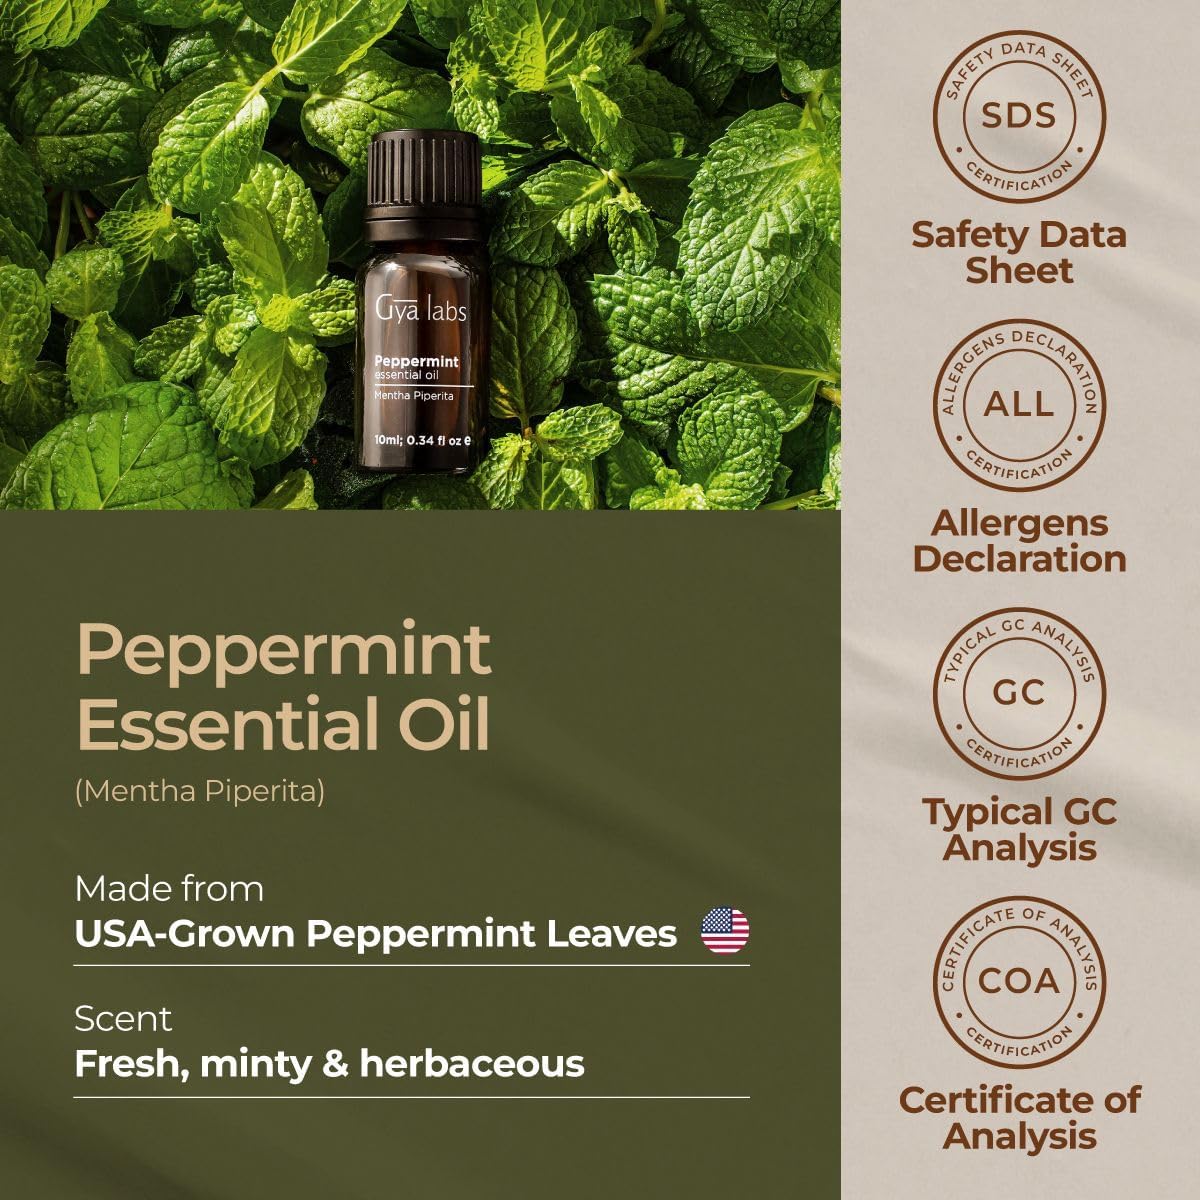 Gya Labs Peppermint Oil for Diffuser - 100% Natural Mint Essential Oils - Peppermint Essential Oil for Diffuser, Skin & Hair (0.34 fl oz)